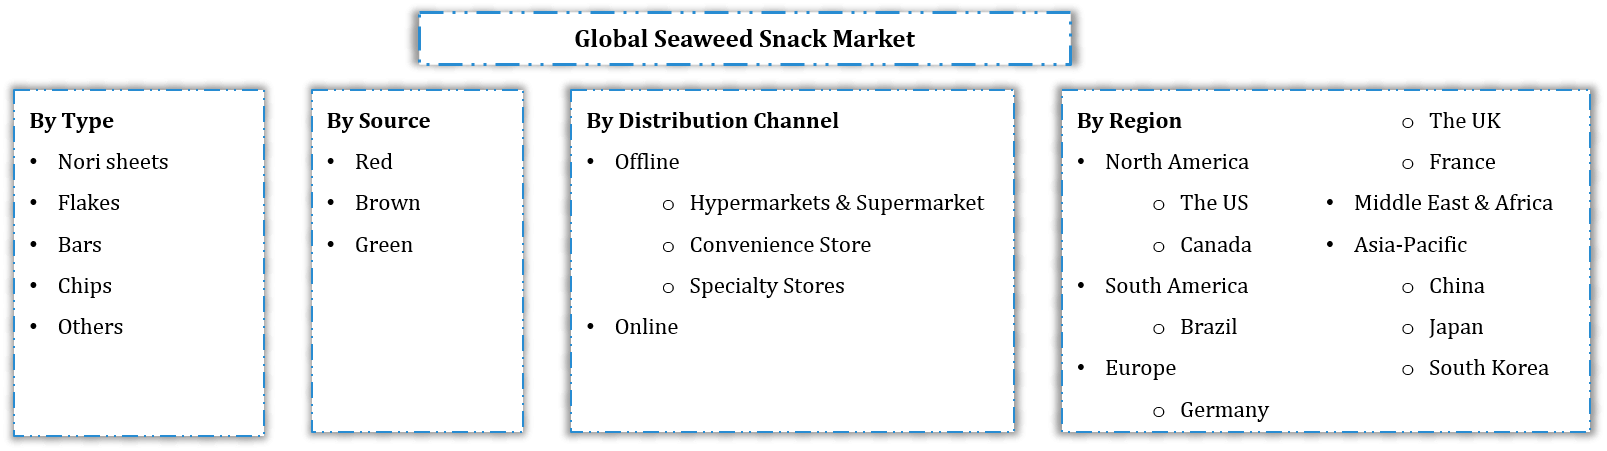 Global Seaweed Snack Market Segmentation